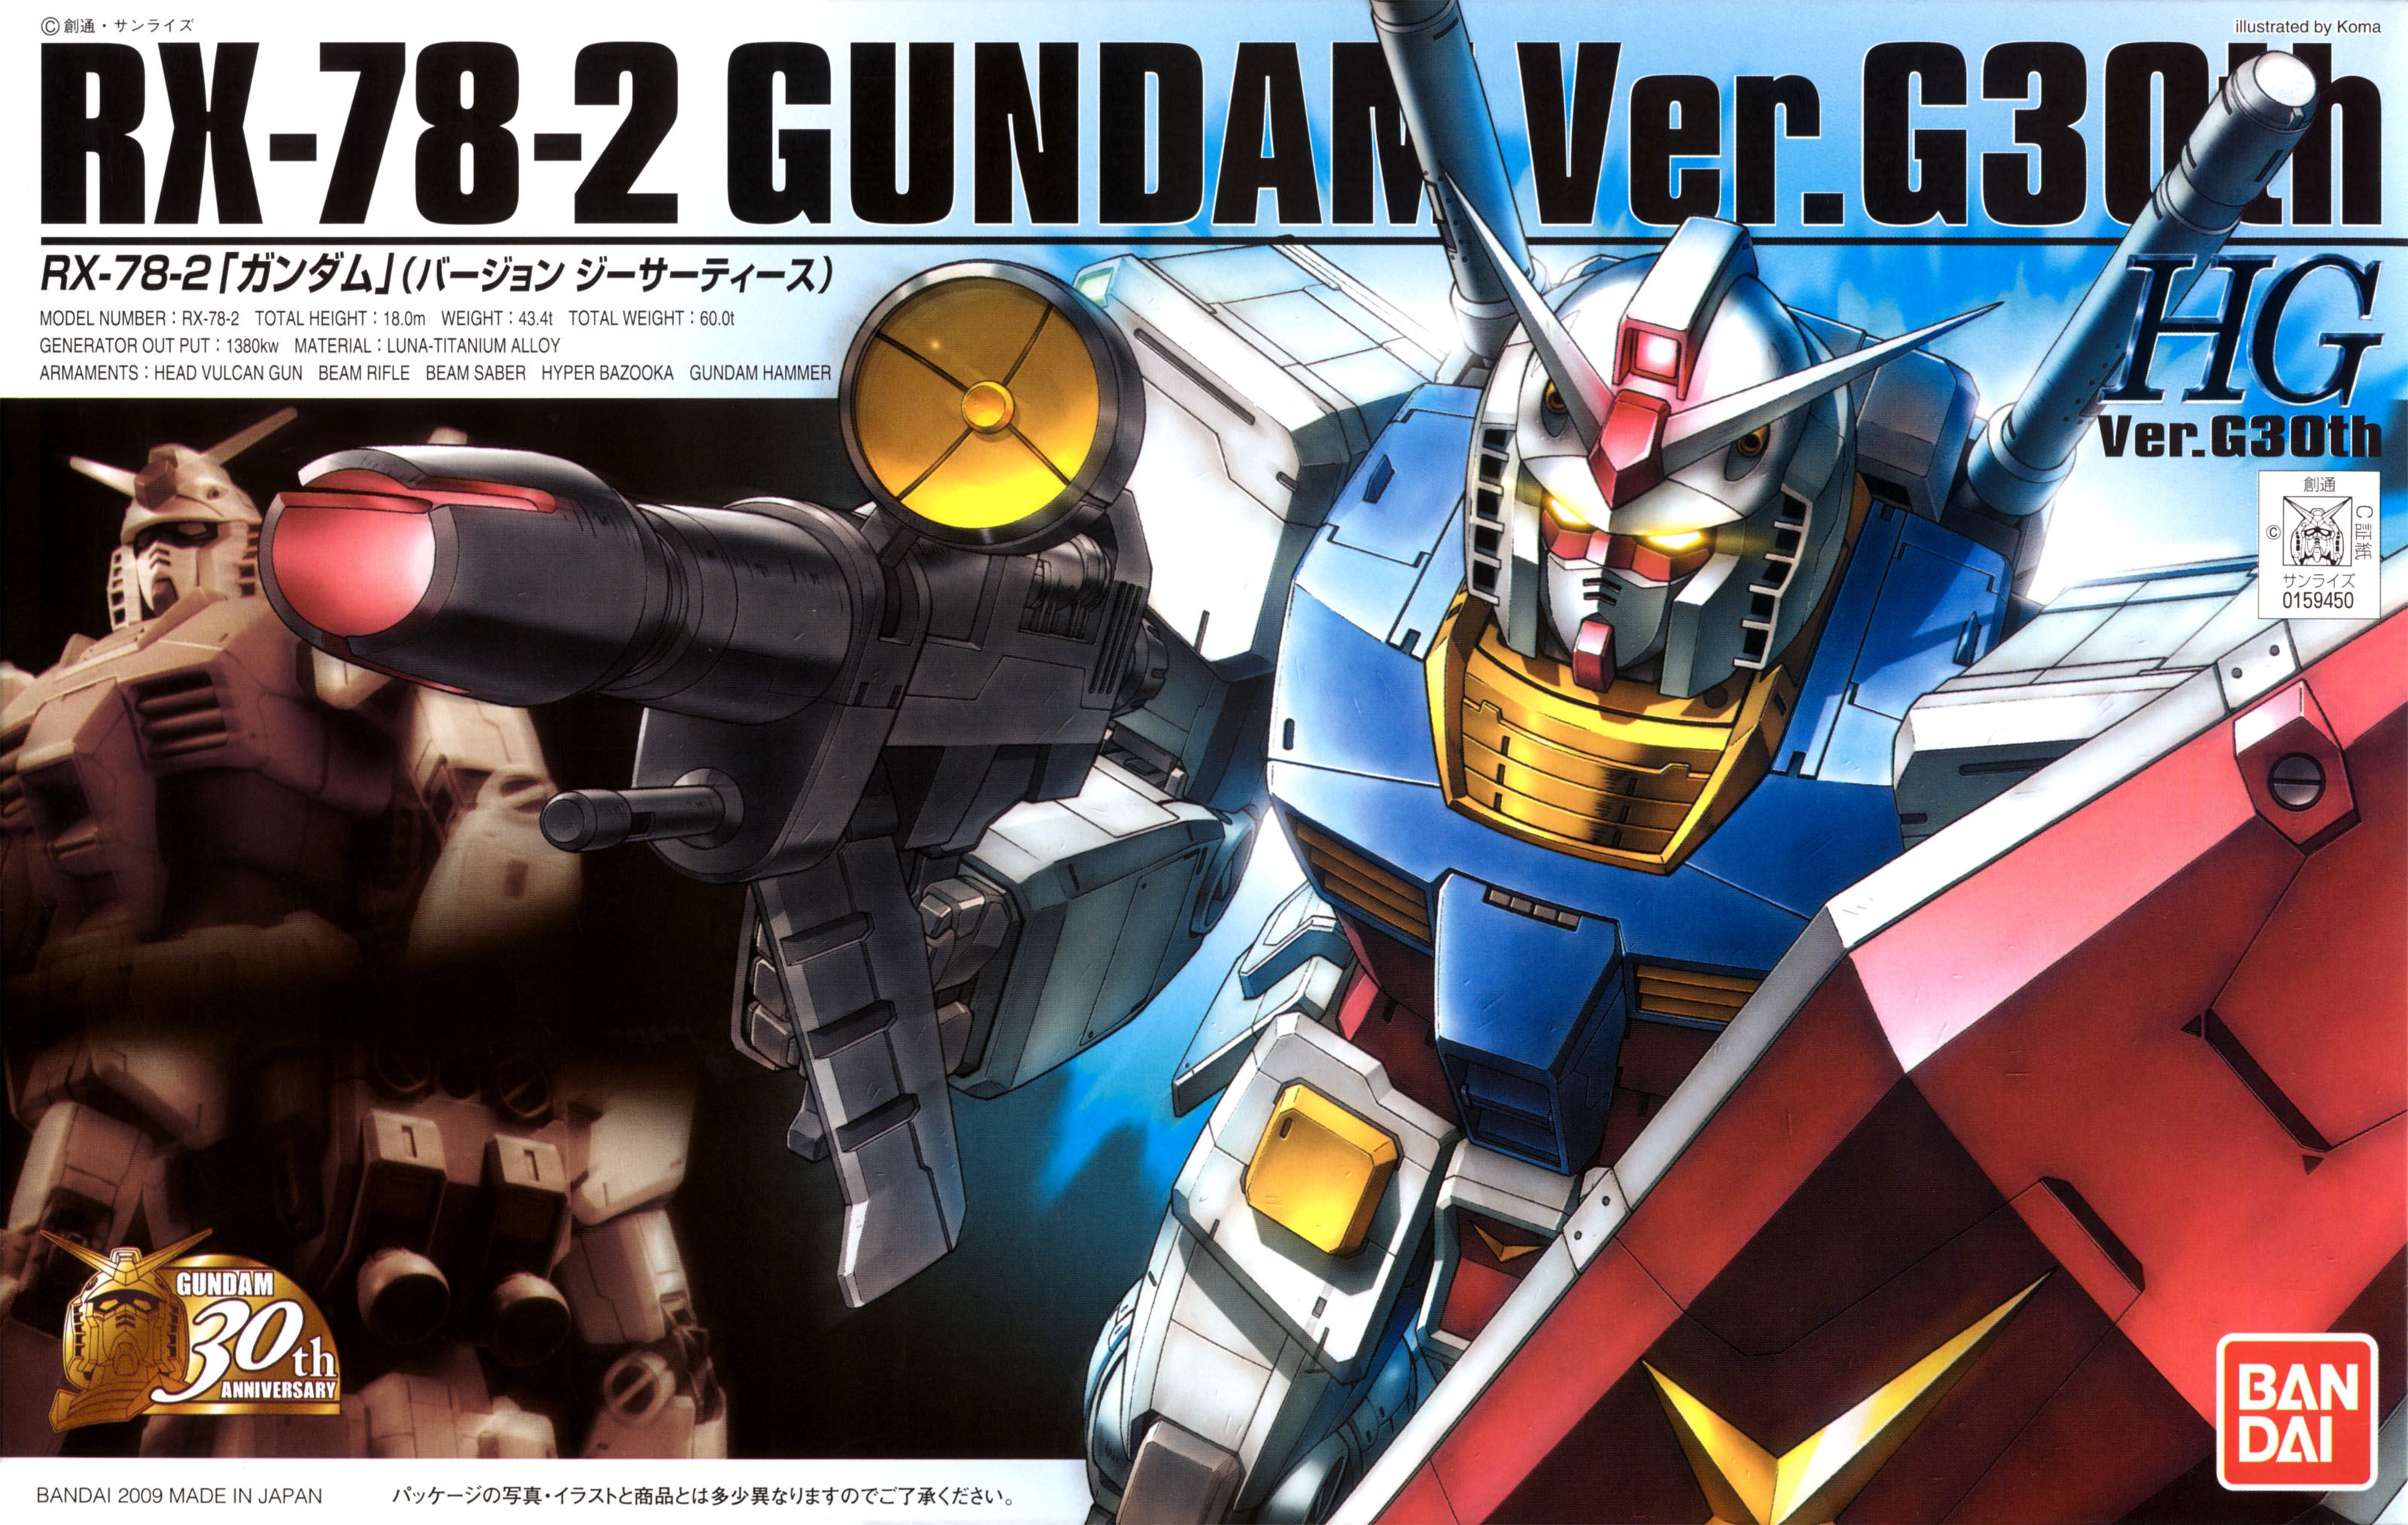 HG_-_RX-78-2_Gundam_Ver.G30th_-_Boxart.j